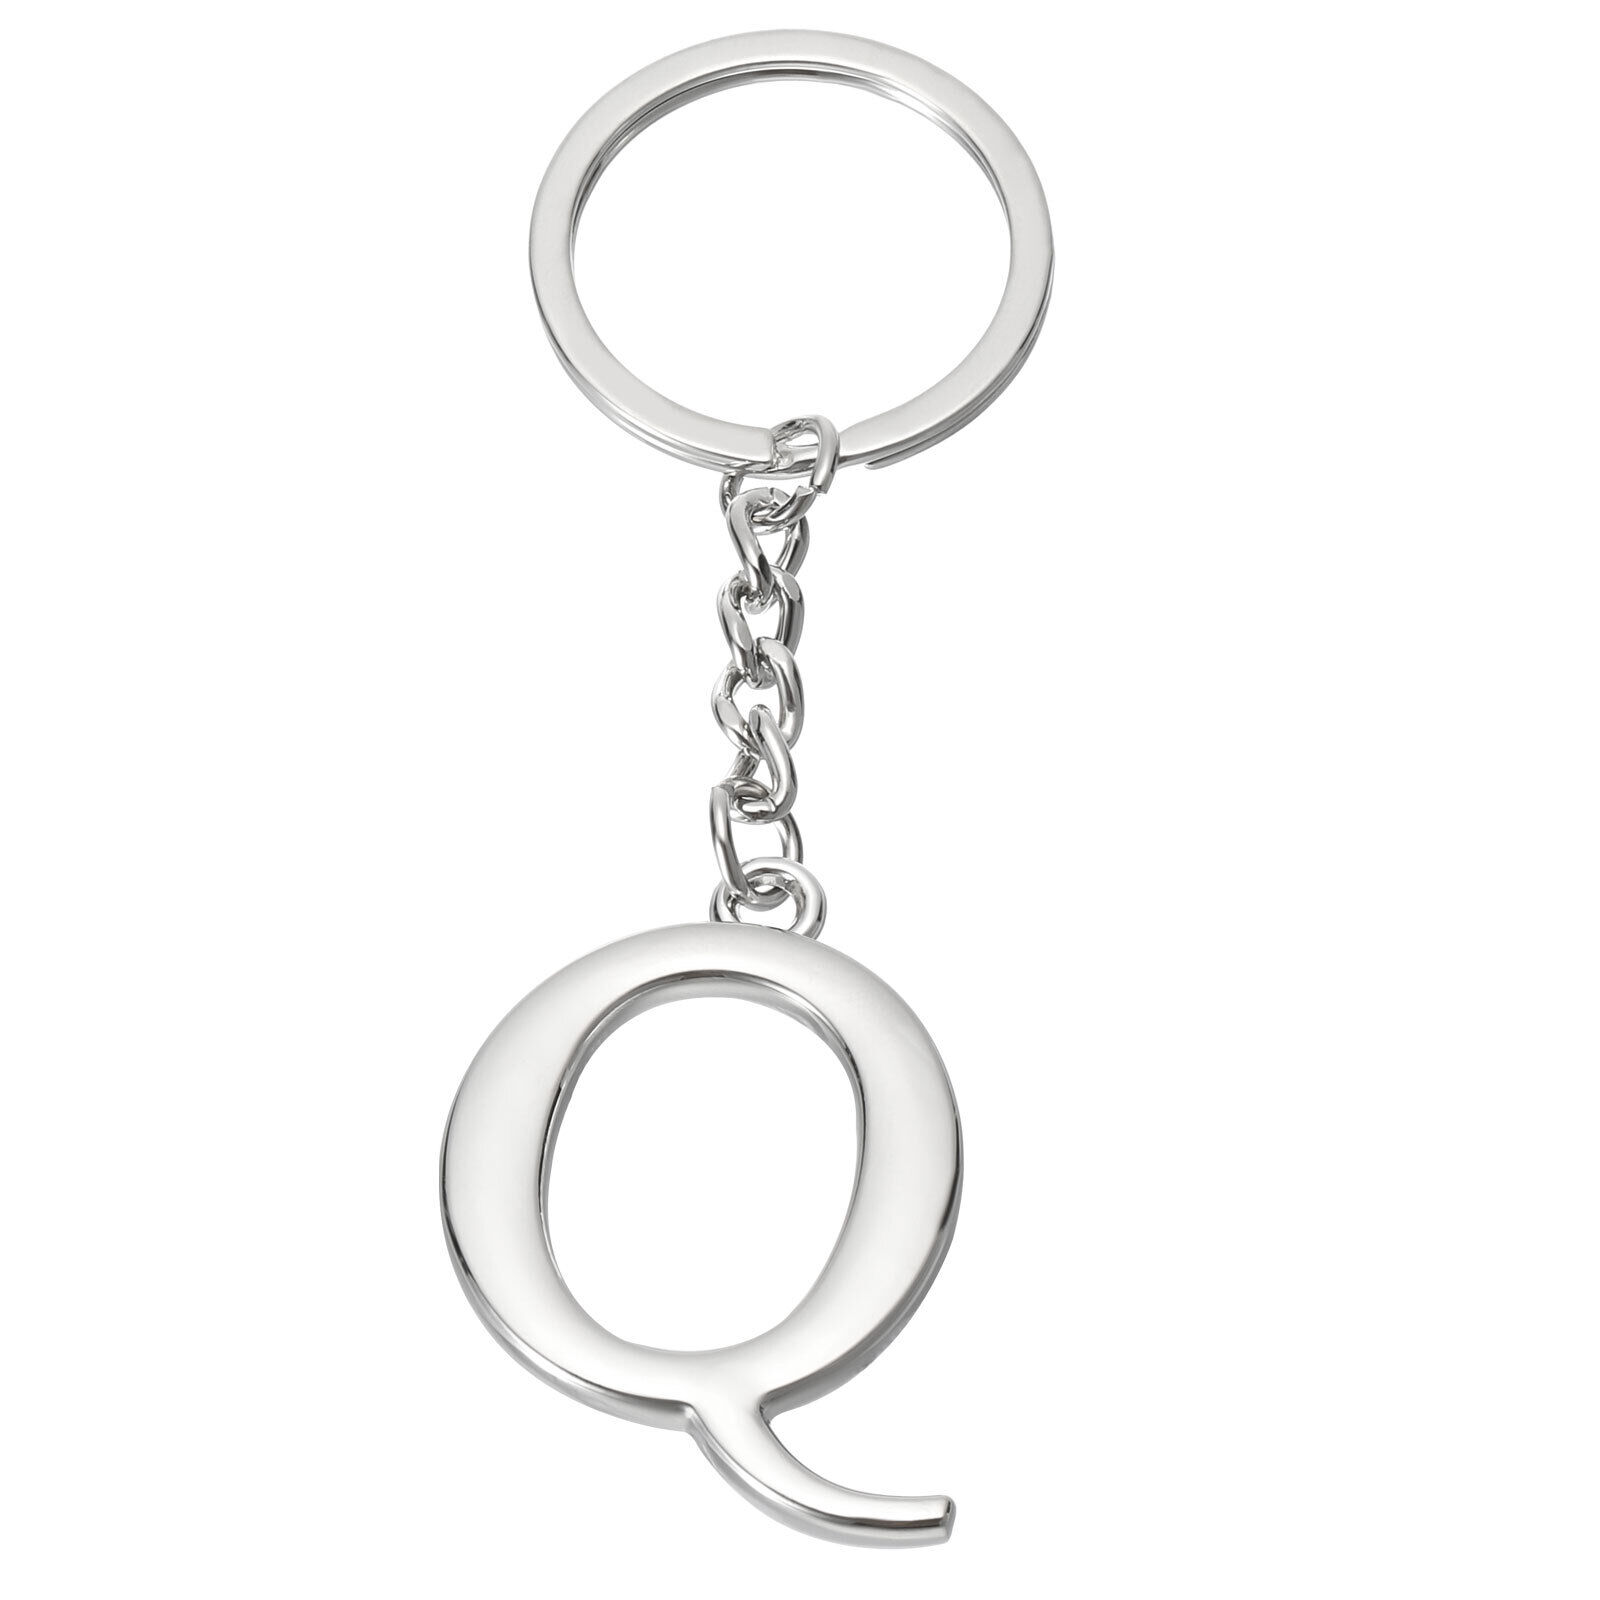 Initial Letter Key Chain, Letter Q Key Chain Pendant Key Ring, Silver